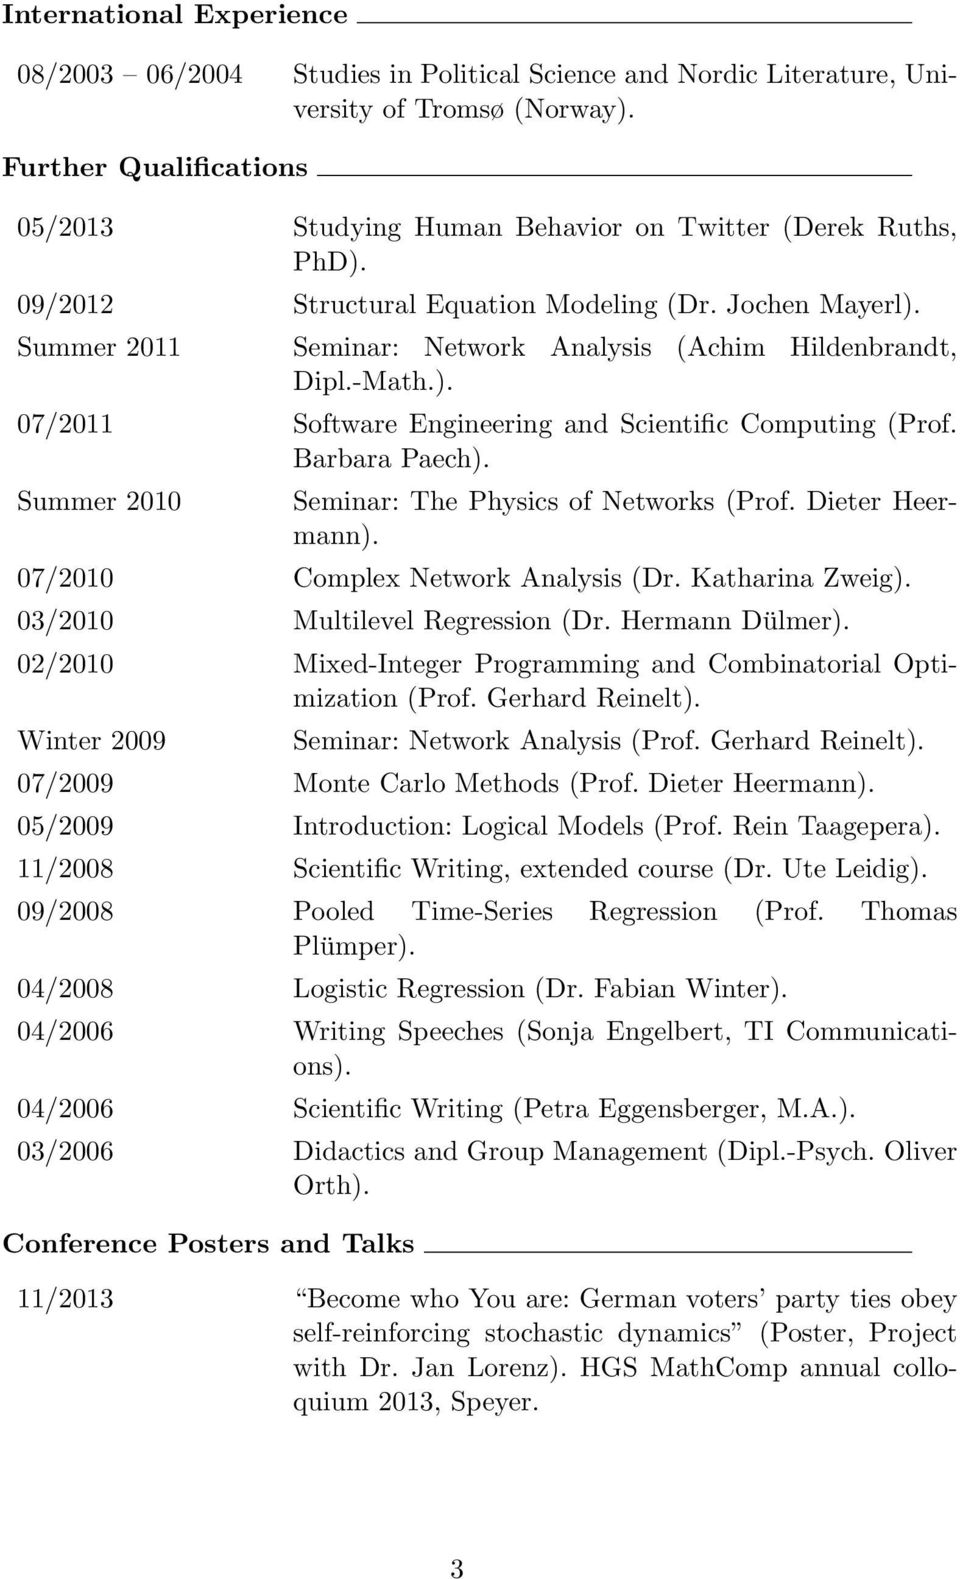 Summer 2011 Seminar: Network Analysis (Achim Hildenbrandt, Dipl.-Math.). 07/2011 Software Engineering and Scientific Computing (Prof. Barbara Paech).